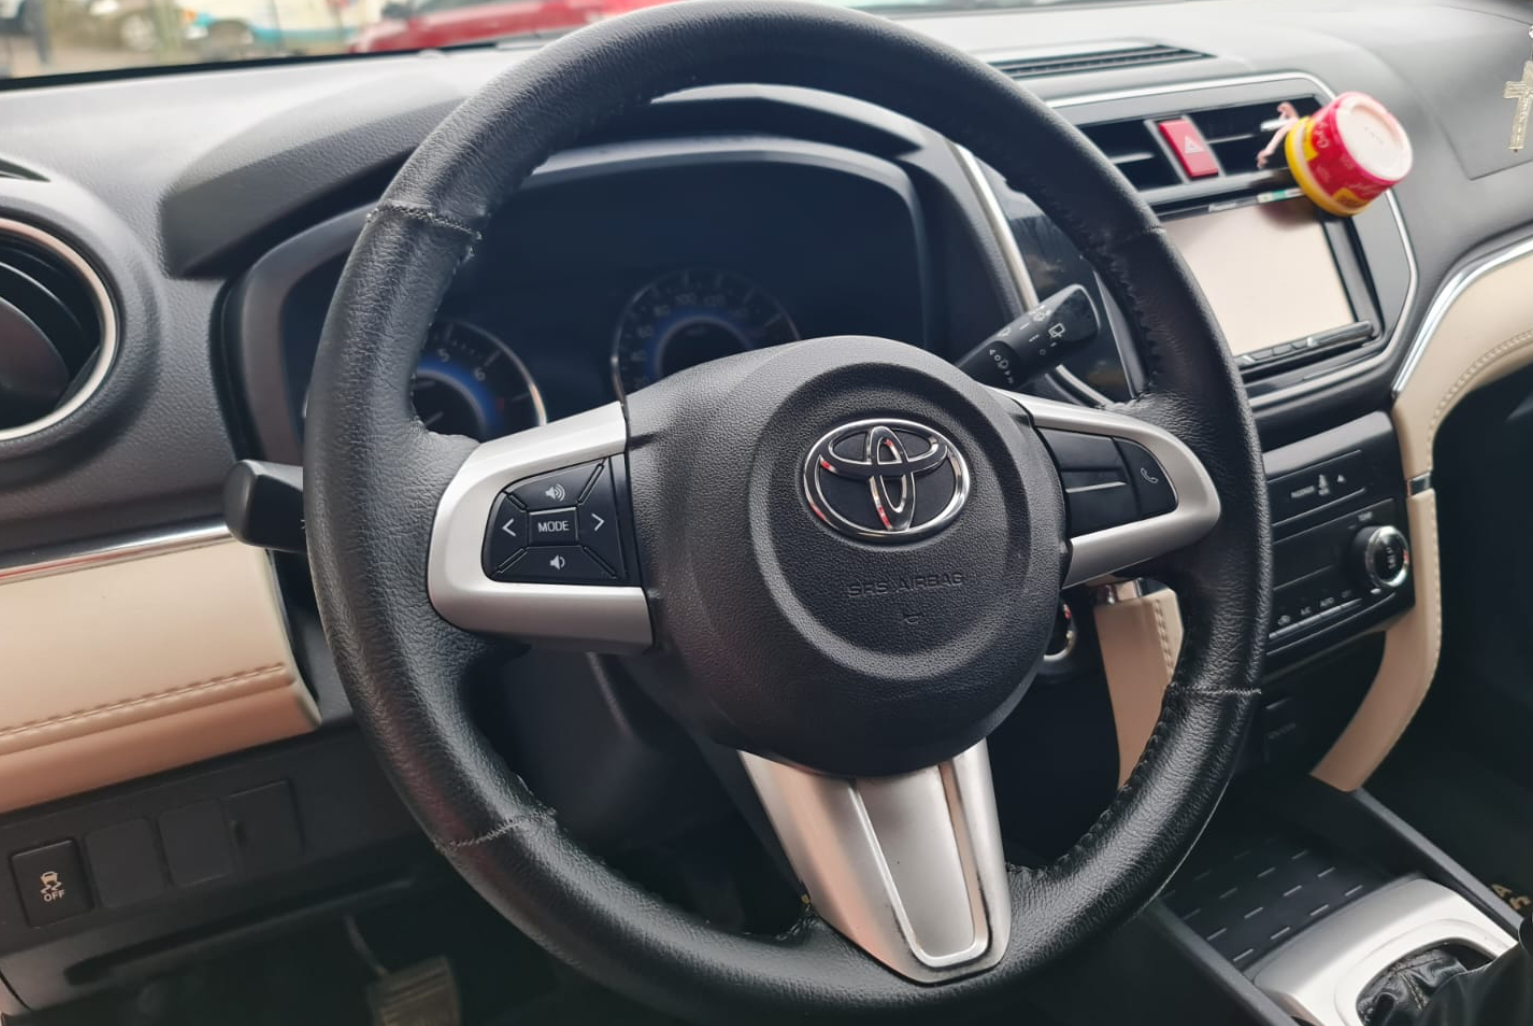 Toyota Rush 2019 Manual color Blanco, Imagen #8